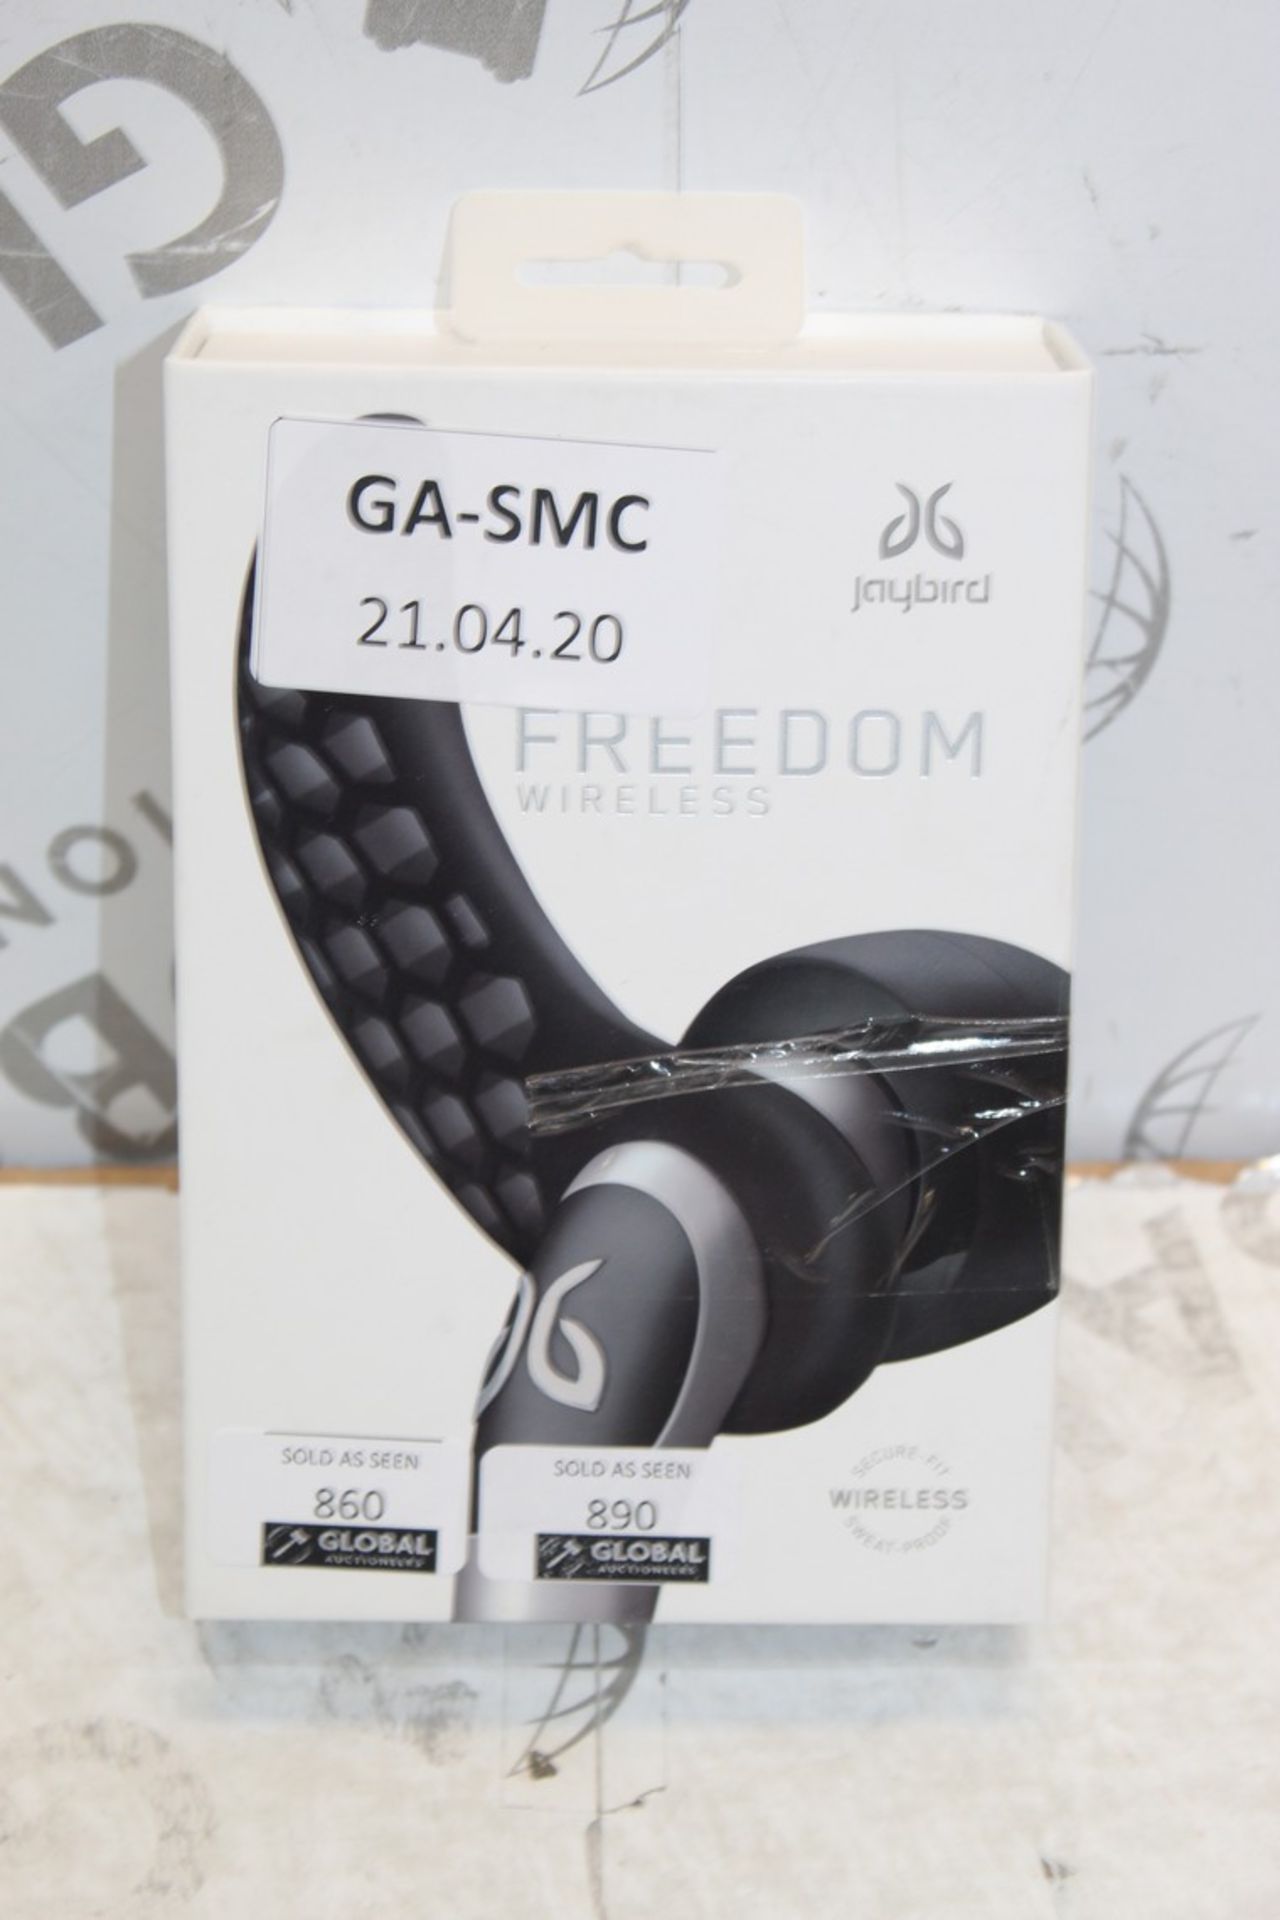 Boxed Pair Of Jay Bird Freedom Wireless Headphones